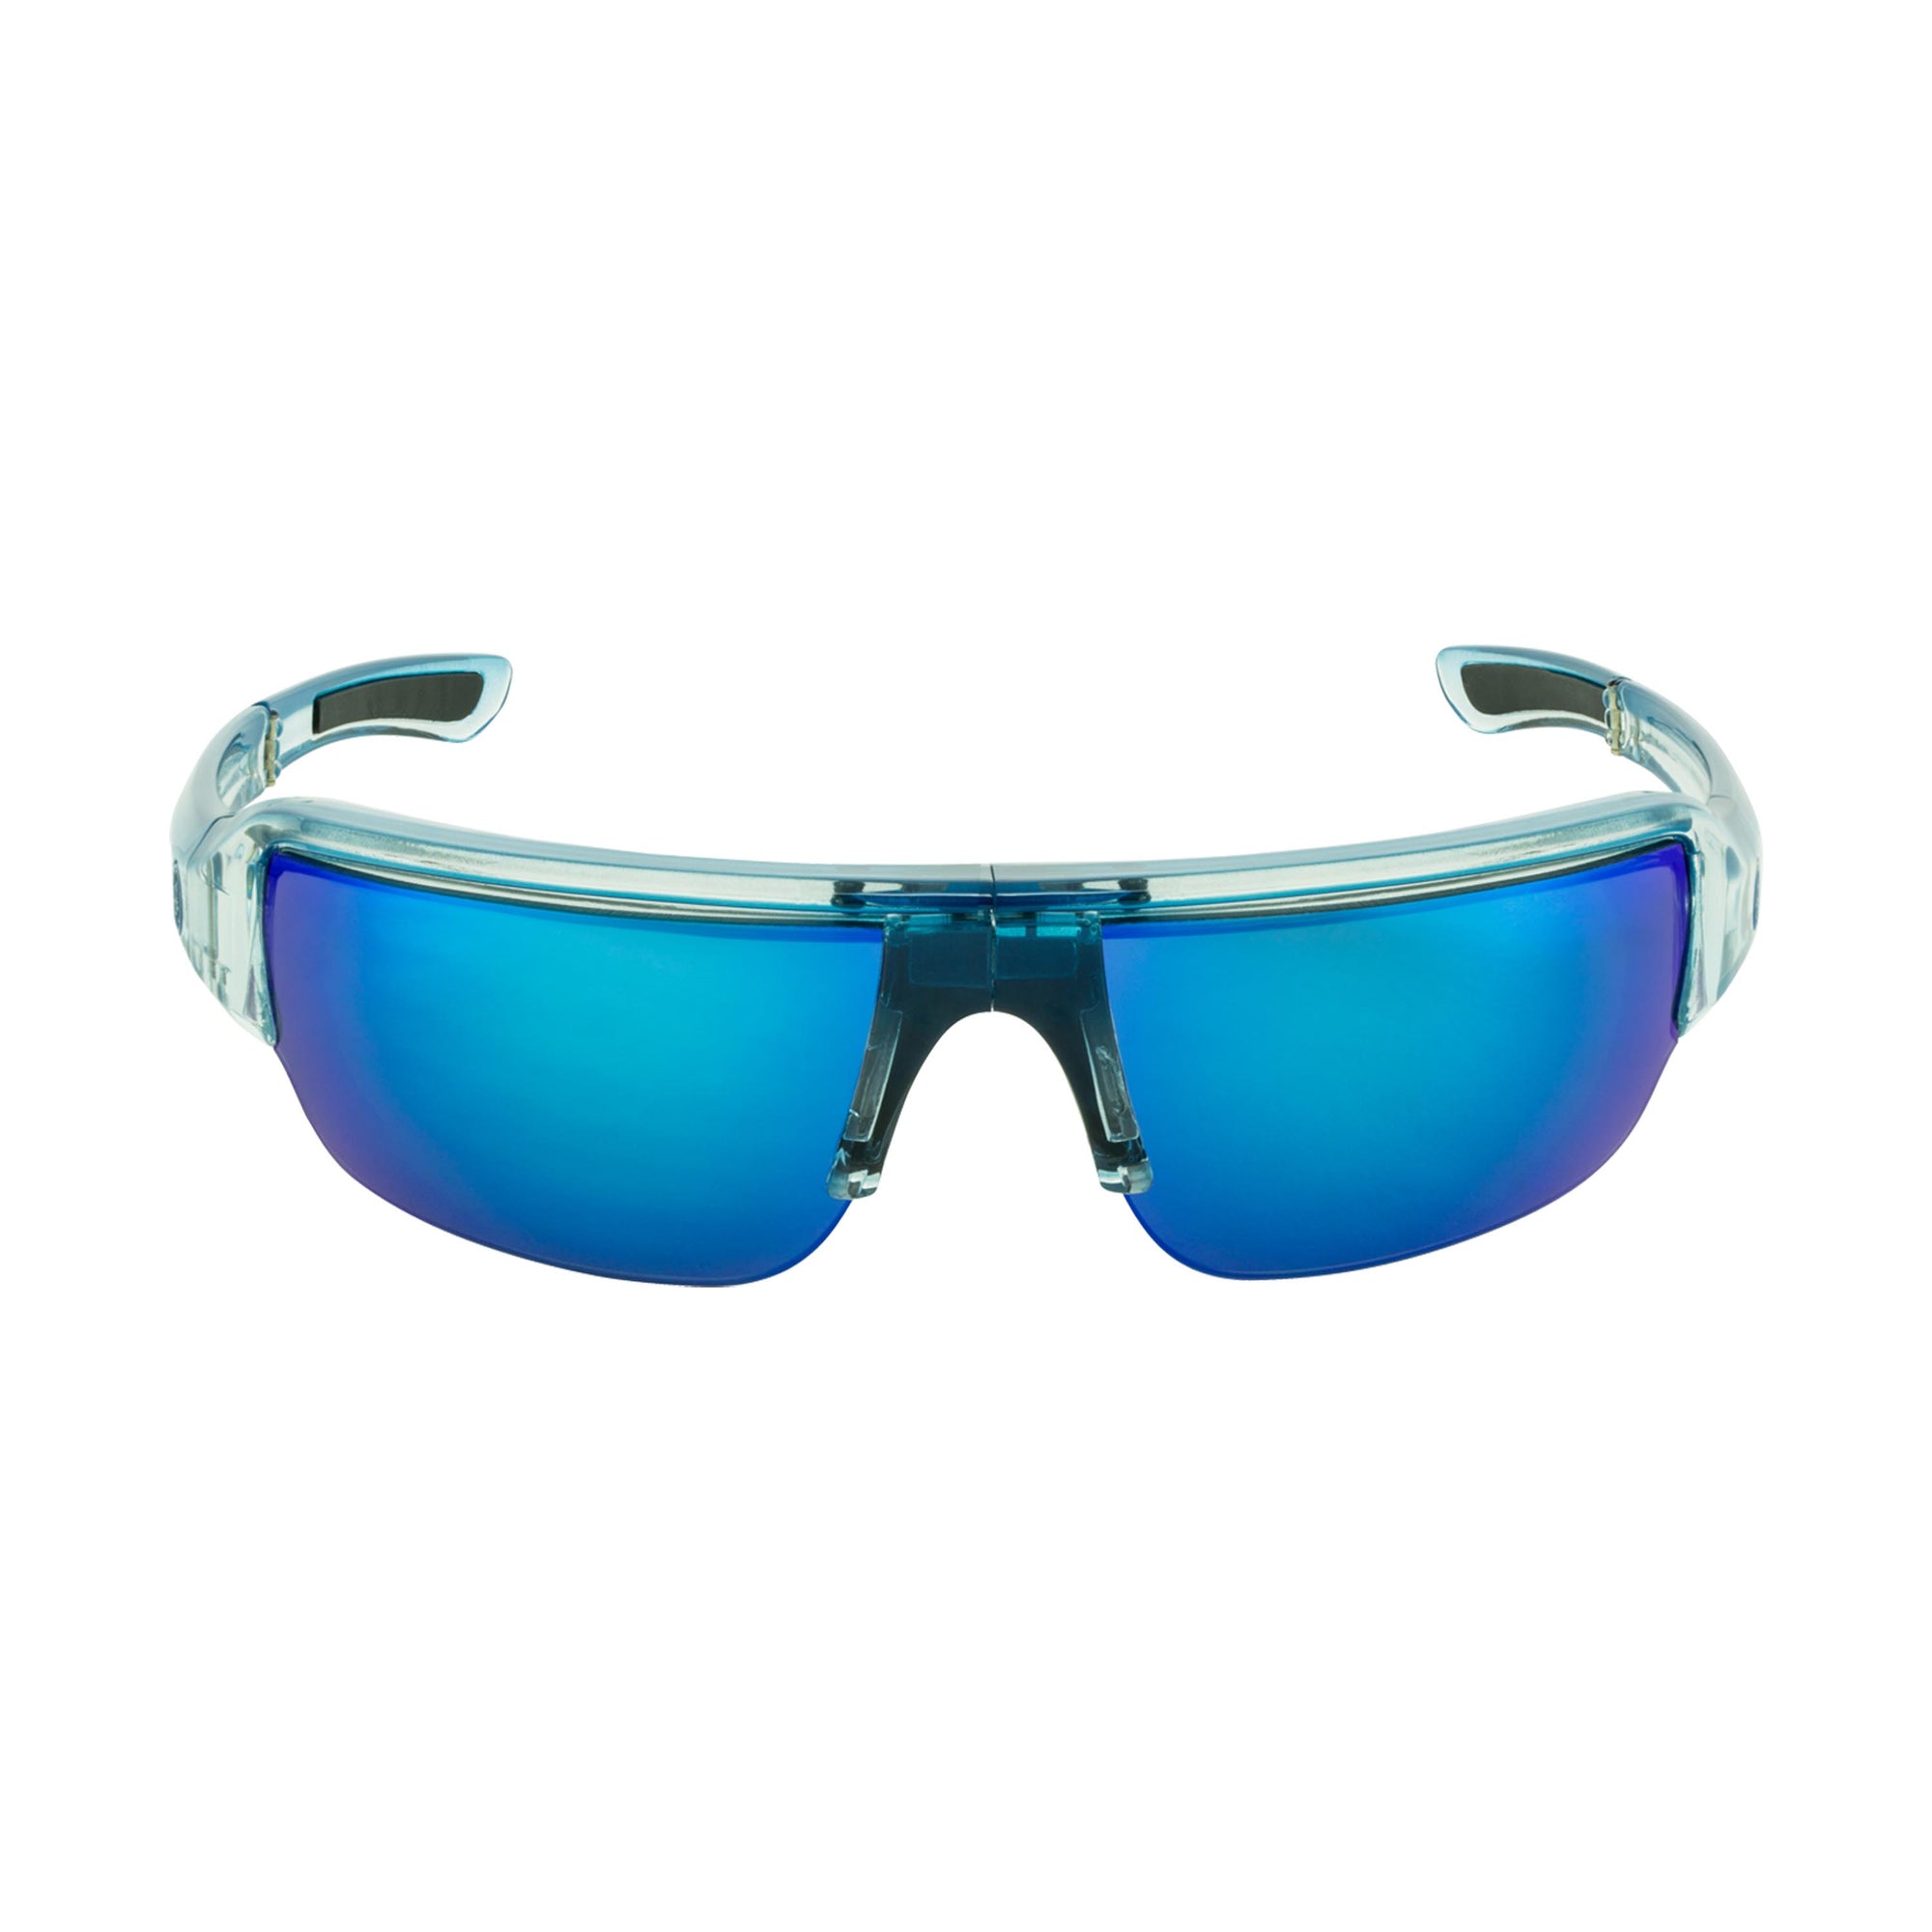 Popticals, Premium Compact Sunglasses, PopGun, 030010-BFUN, Polarized Sunglasses, Gloss Blue/Clear Crystal Frame, Gray Lenses w/Blue Mirror Finish, Glam View